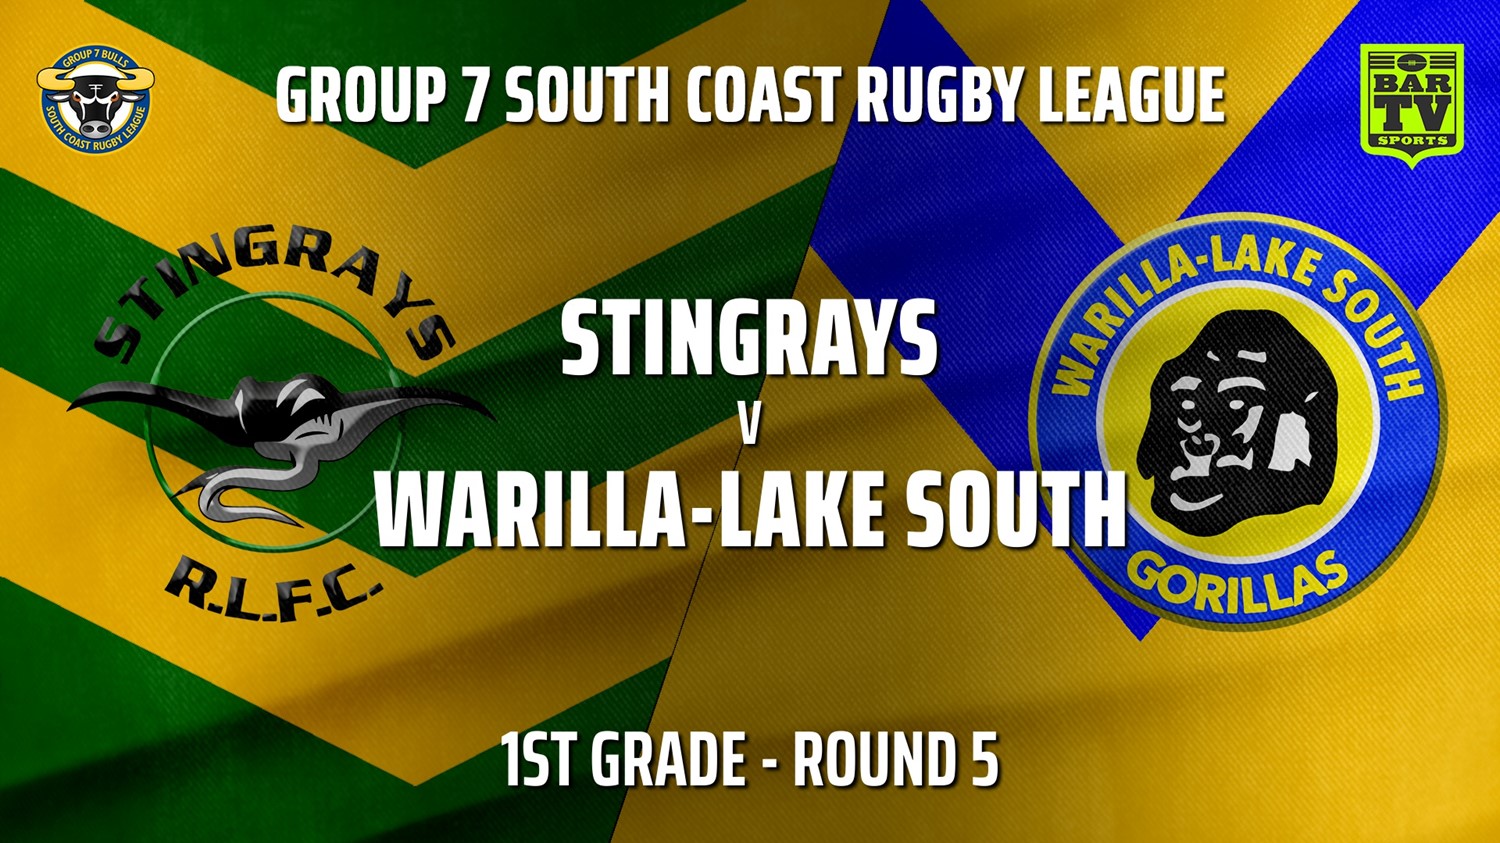 210516-Group 7 RL Round 5 - 1st Grade - Stingrays of Shellharbour v Warilla-Lake South Minigame Slate Image